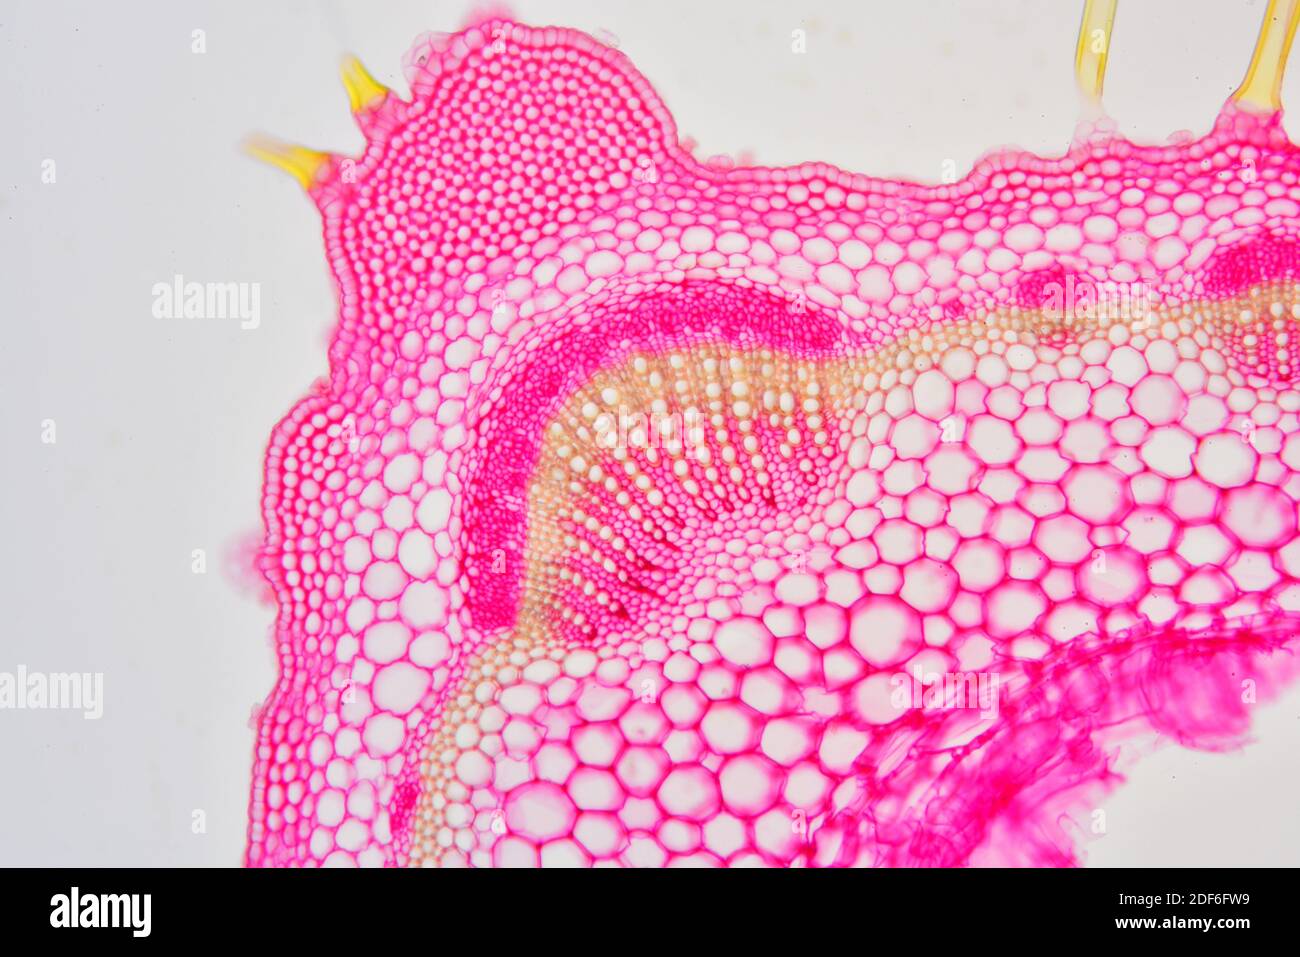 Eudicot stem of Lamiaceae plant showing epidermis, hairs, collenchyma, cortex, parenchyma, vascular bundles, phloem and xylem. Optical microscope Stock Photo